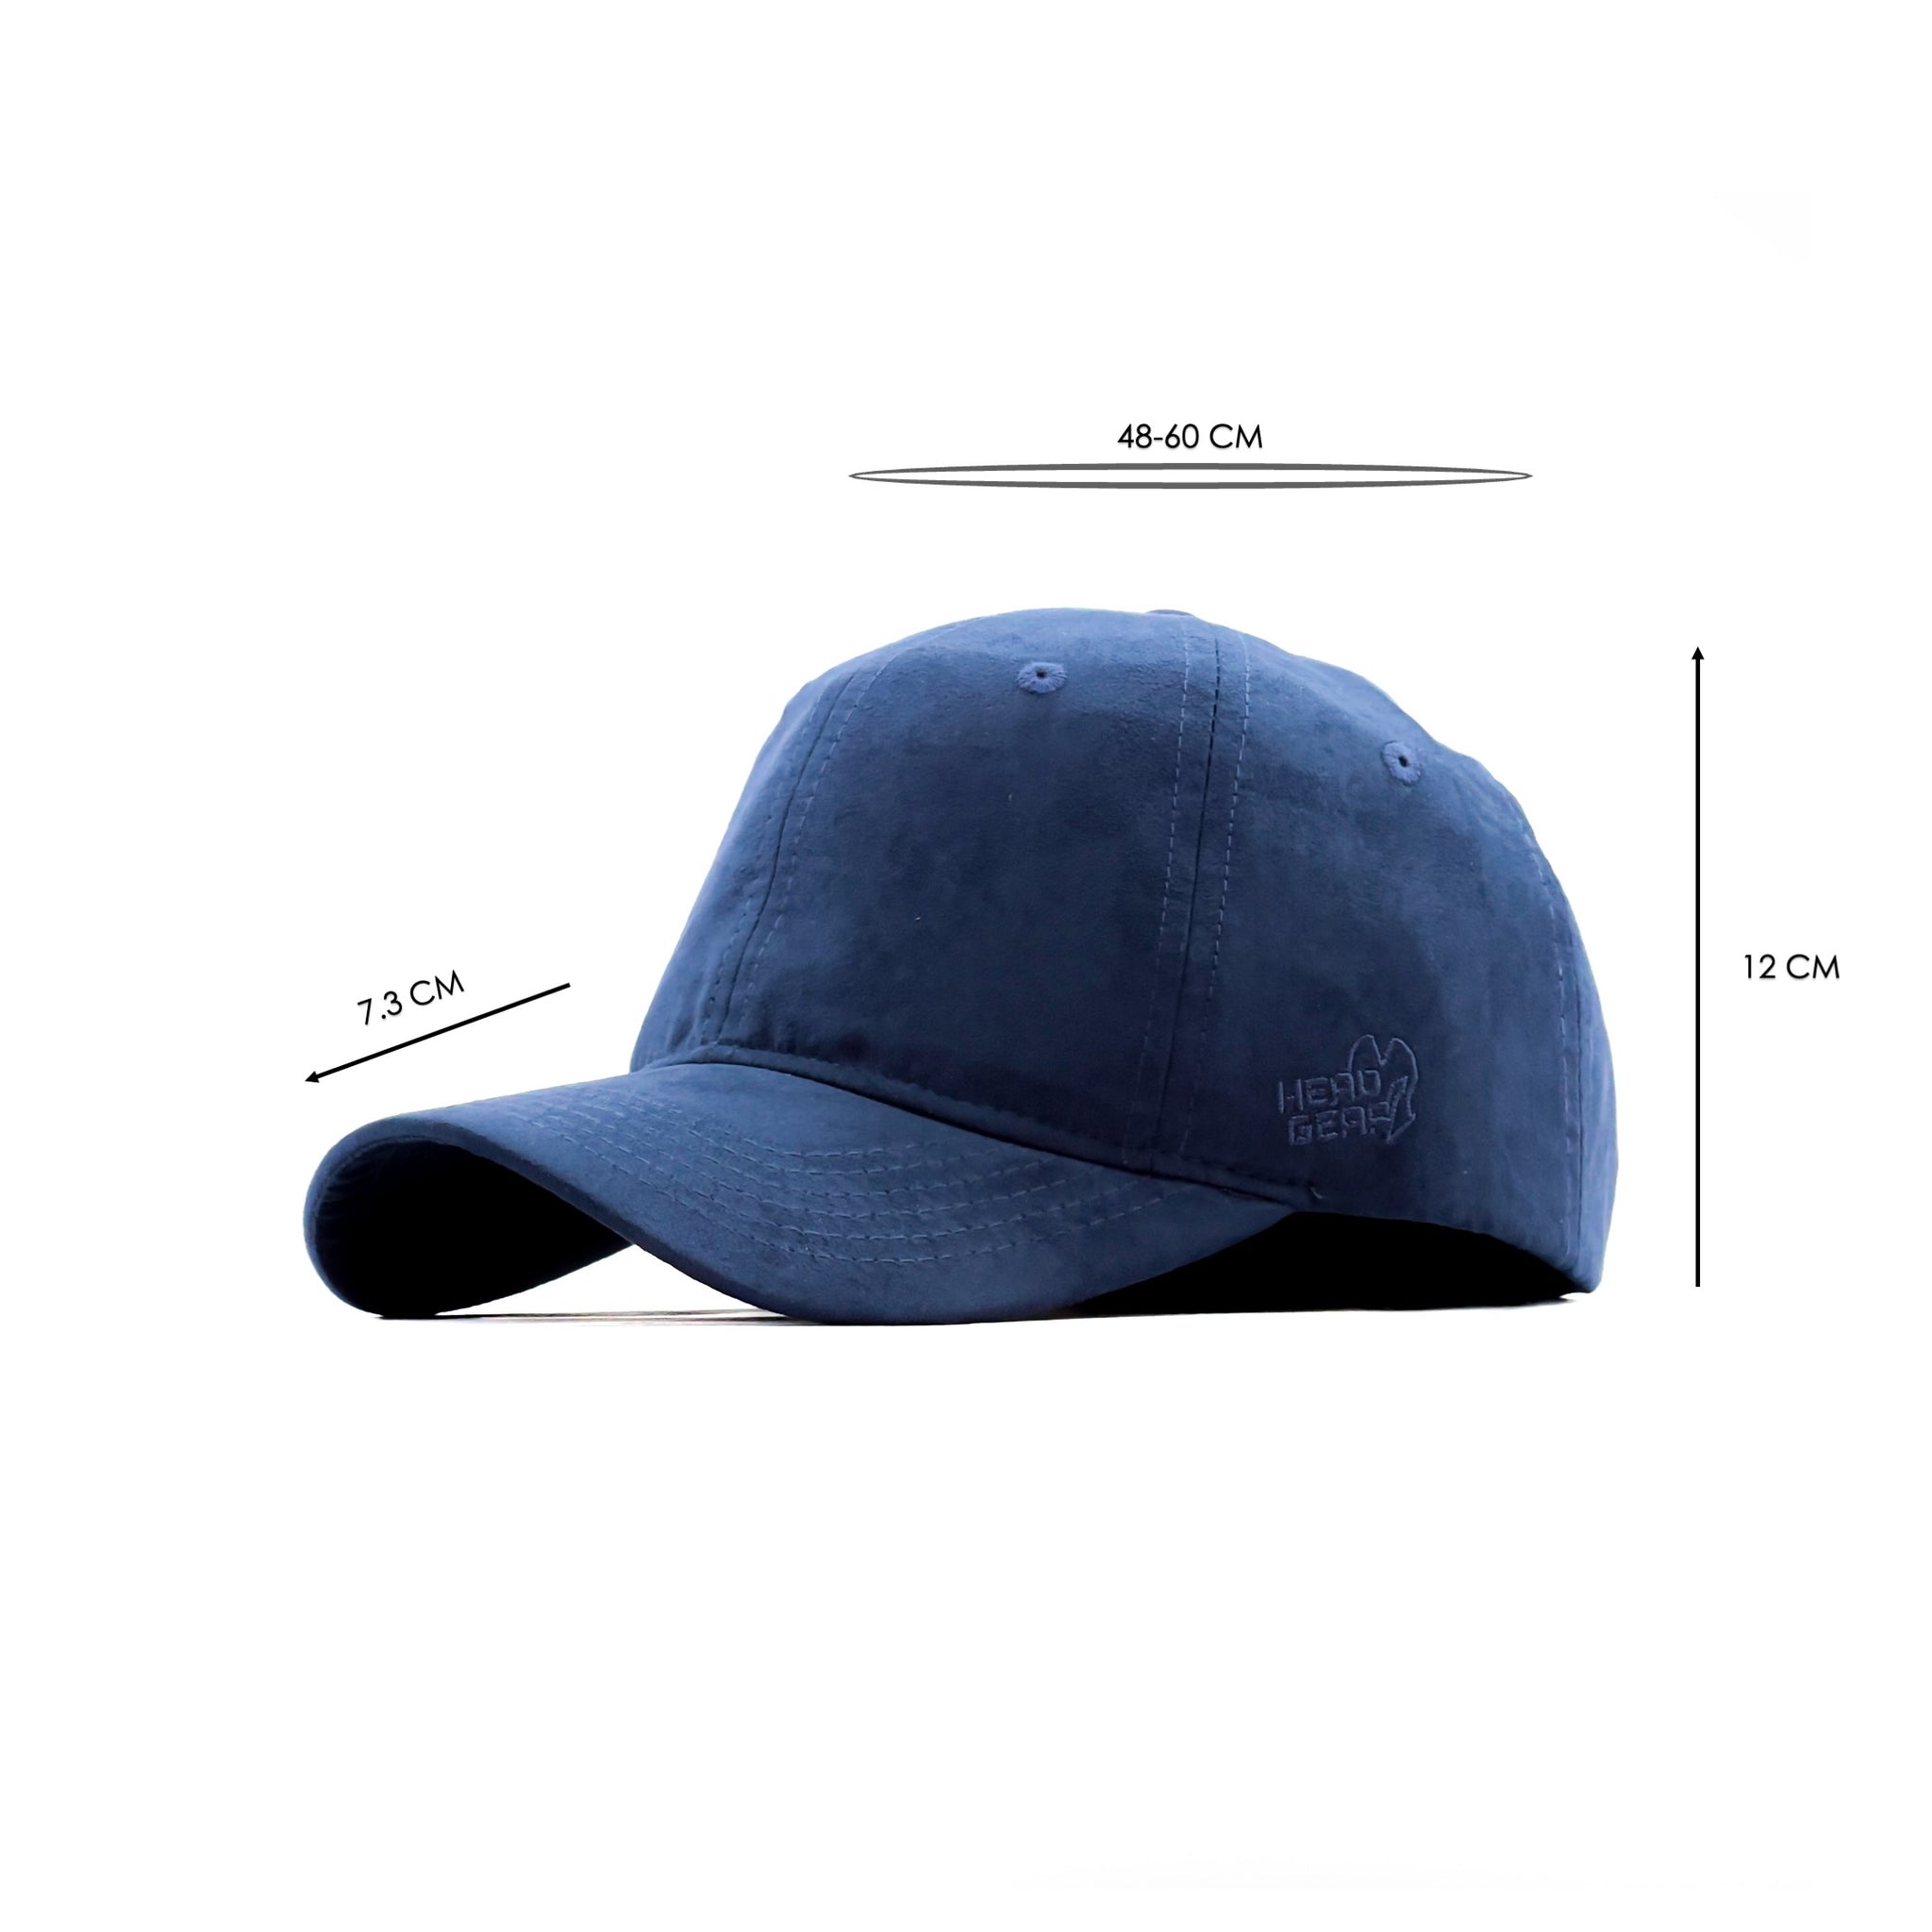 HEAD GEAR BASIC SUEDE NAVY BLUE CAP – Head Gear